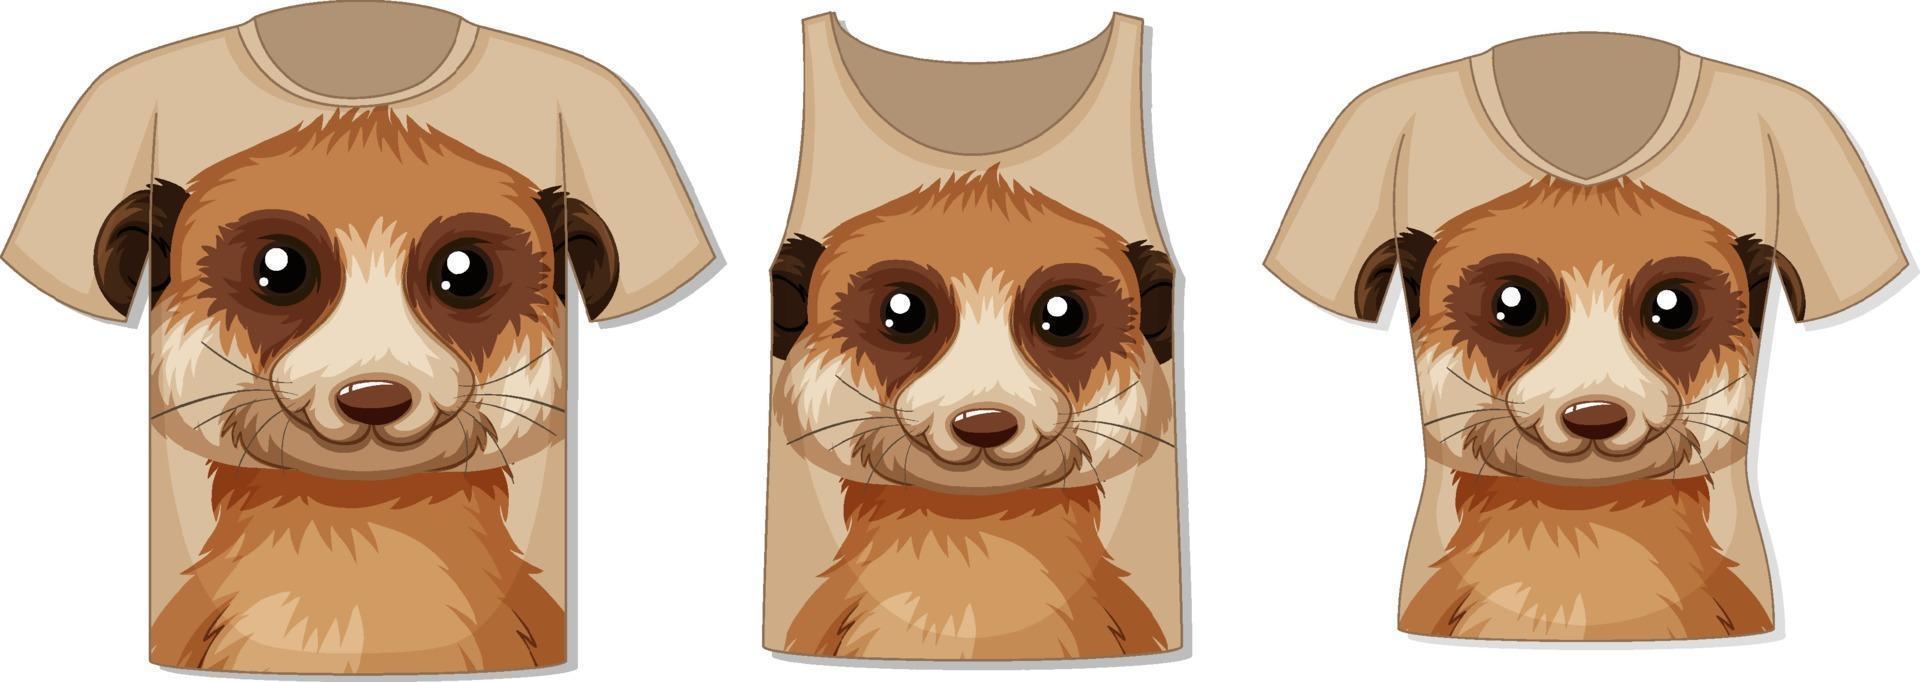 Front of t-shirt with meerkat template vector